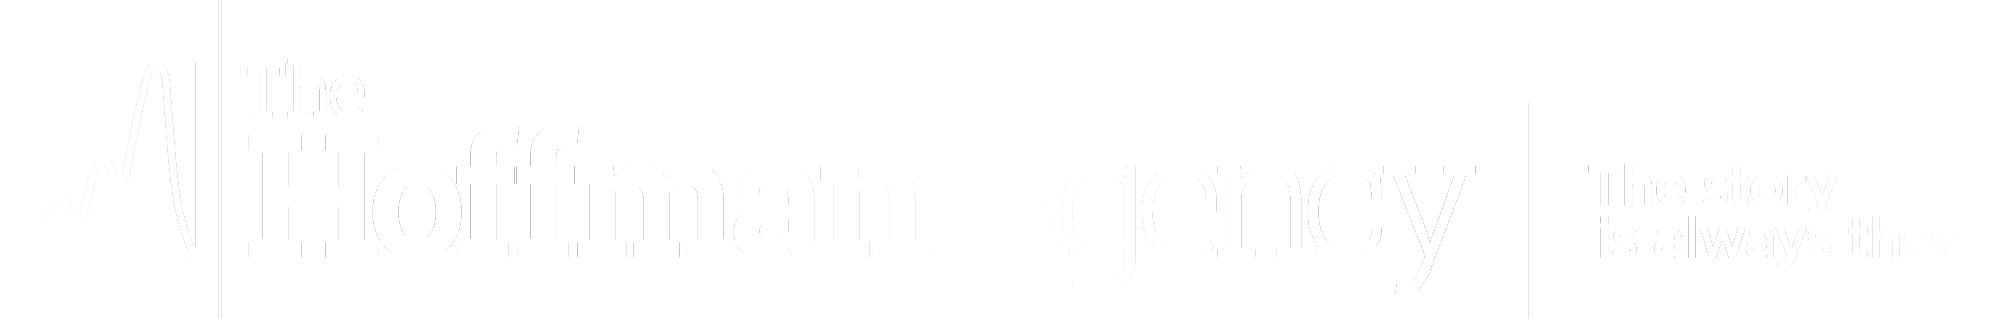 the hoffman agency logo